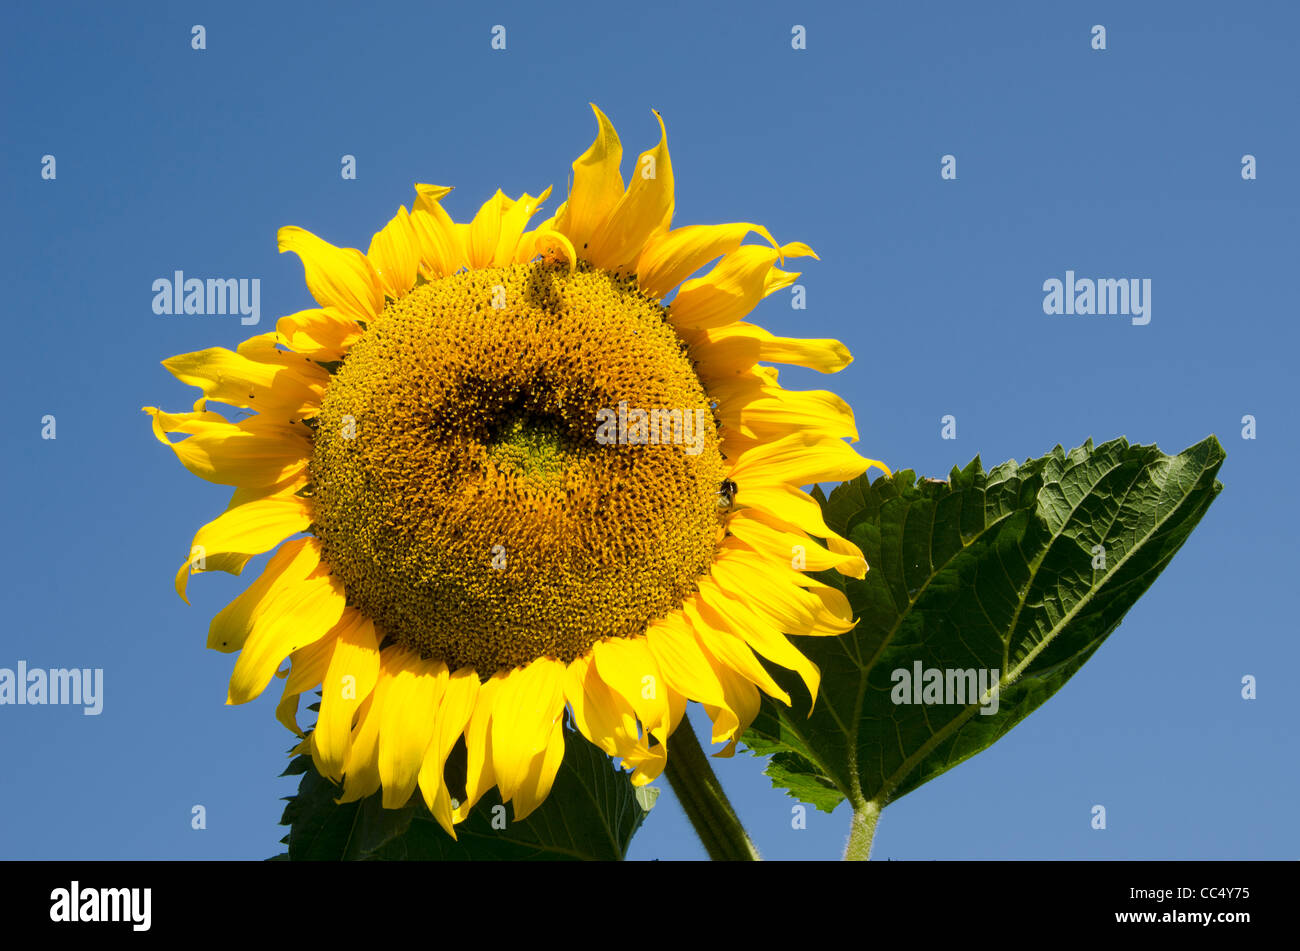 Ripe sunflower looks like sun on background of blue sky. Stock Photo